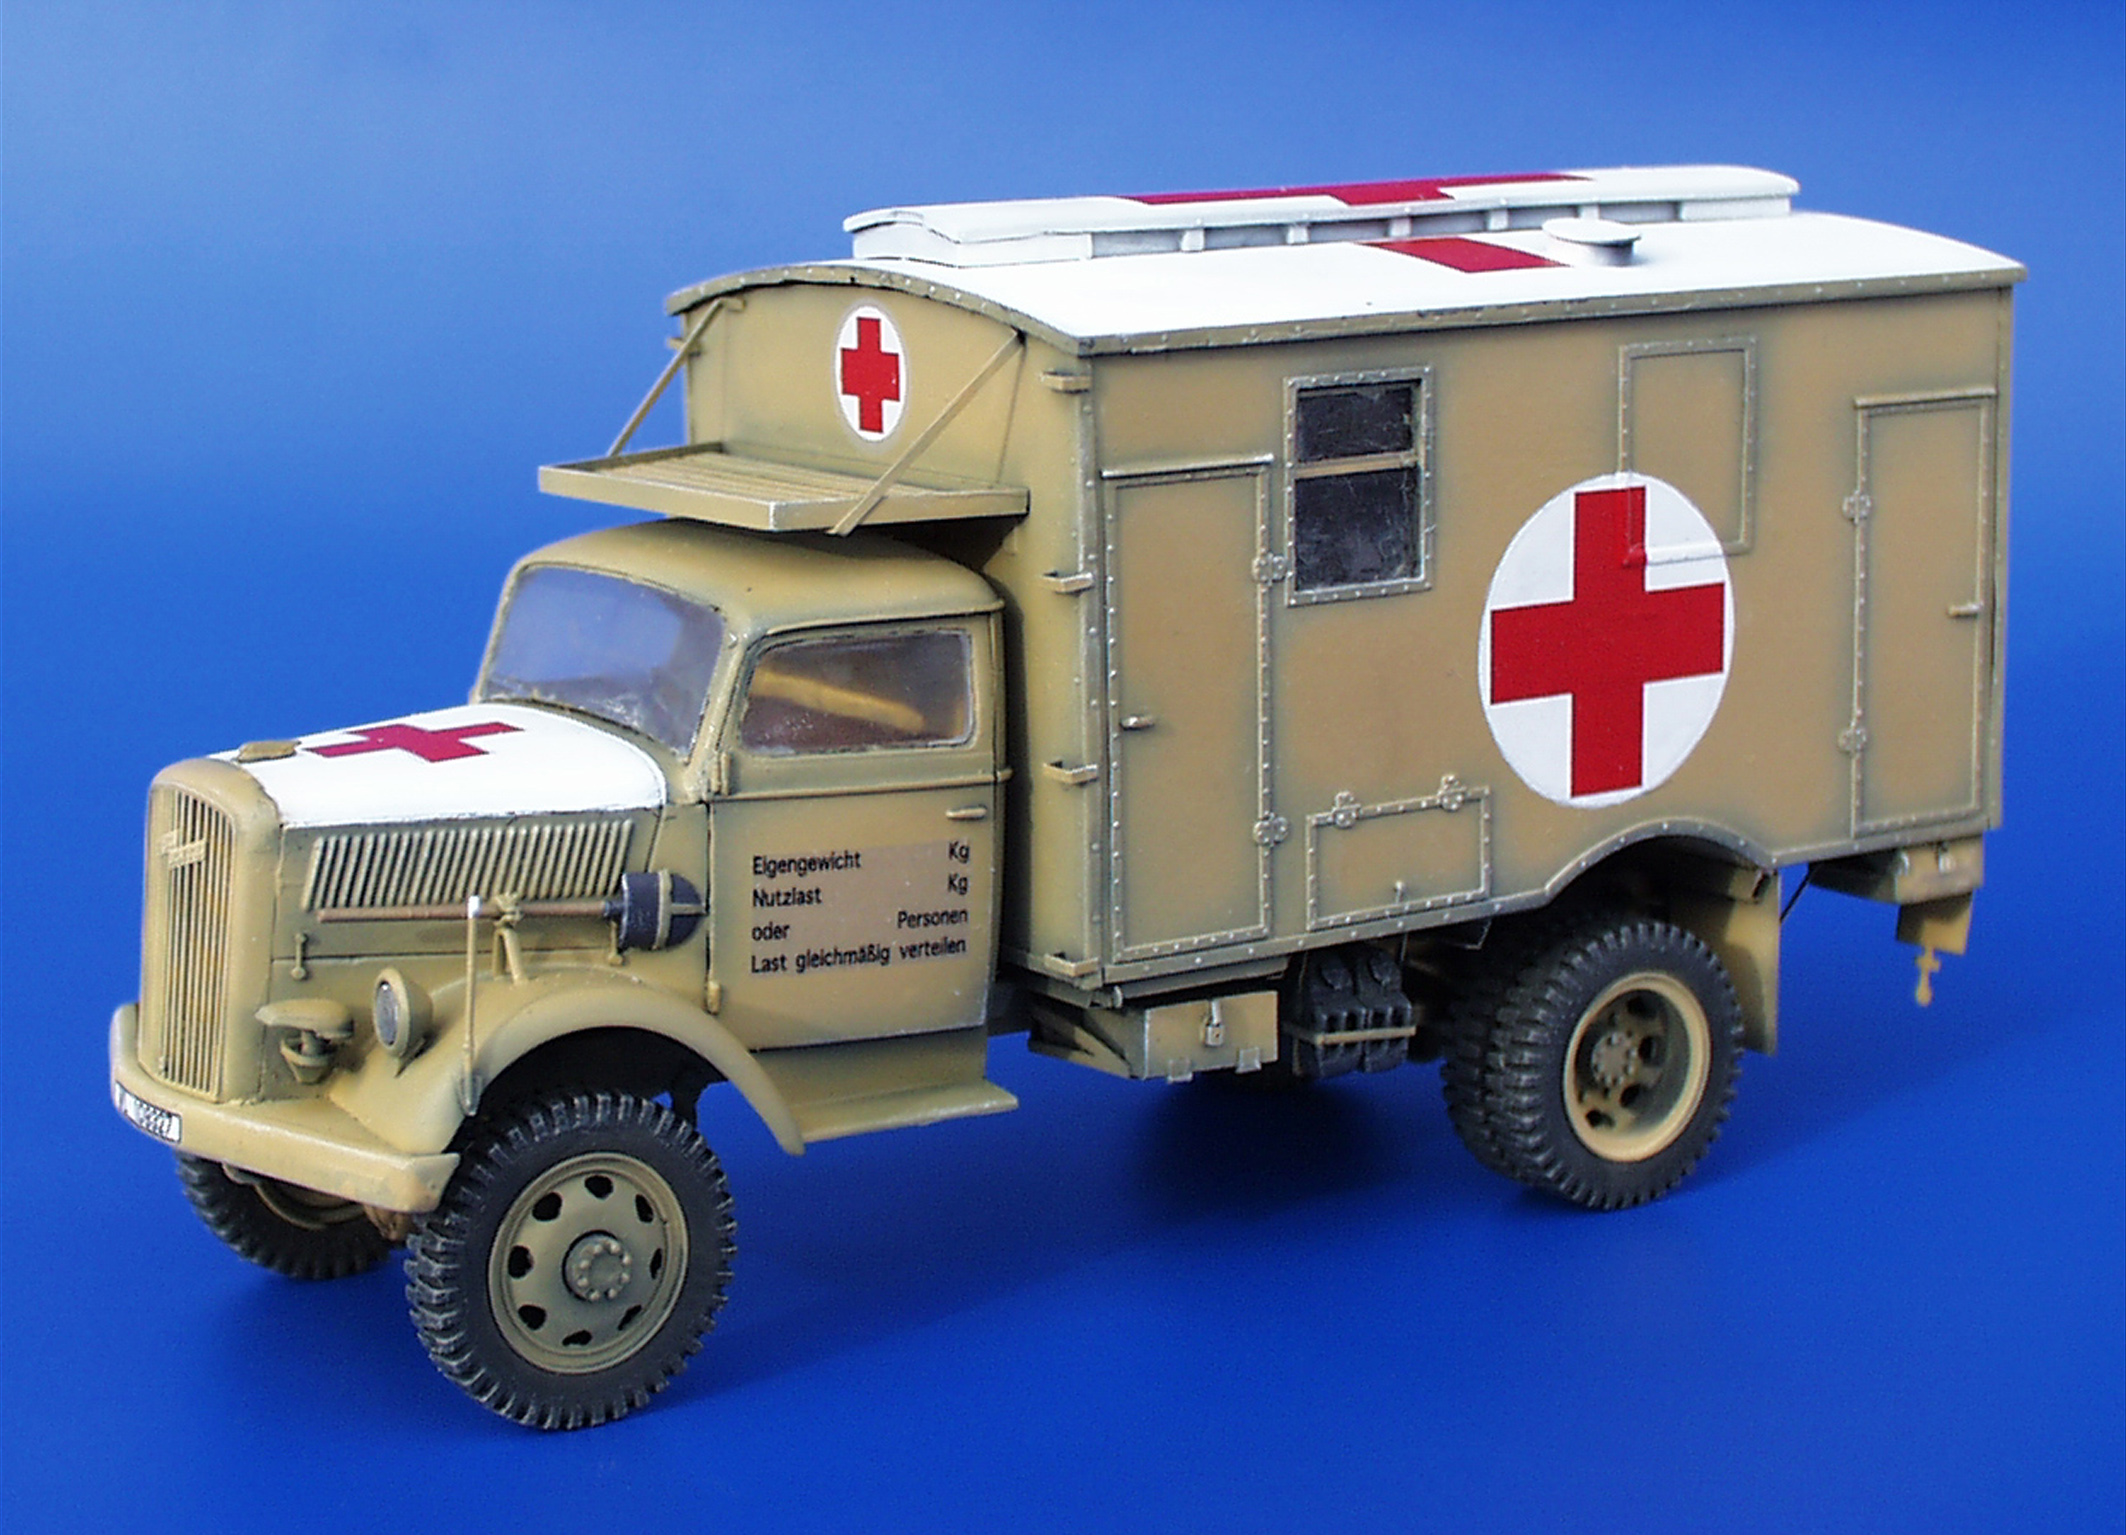 092 Opel Blitz 4x4 ambulance conversion set